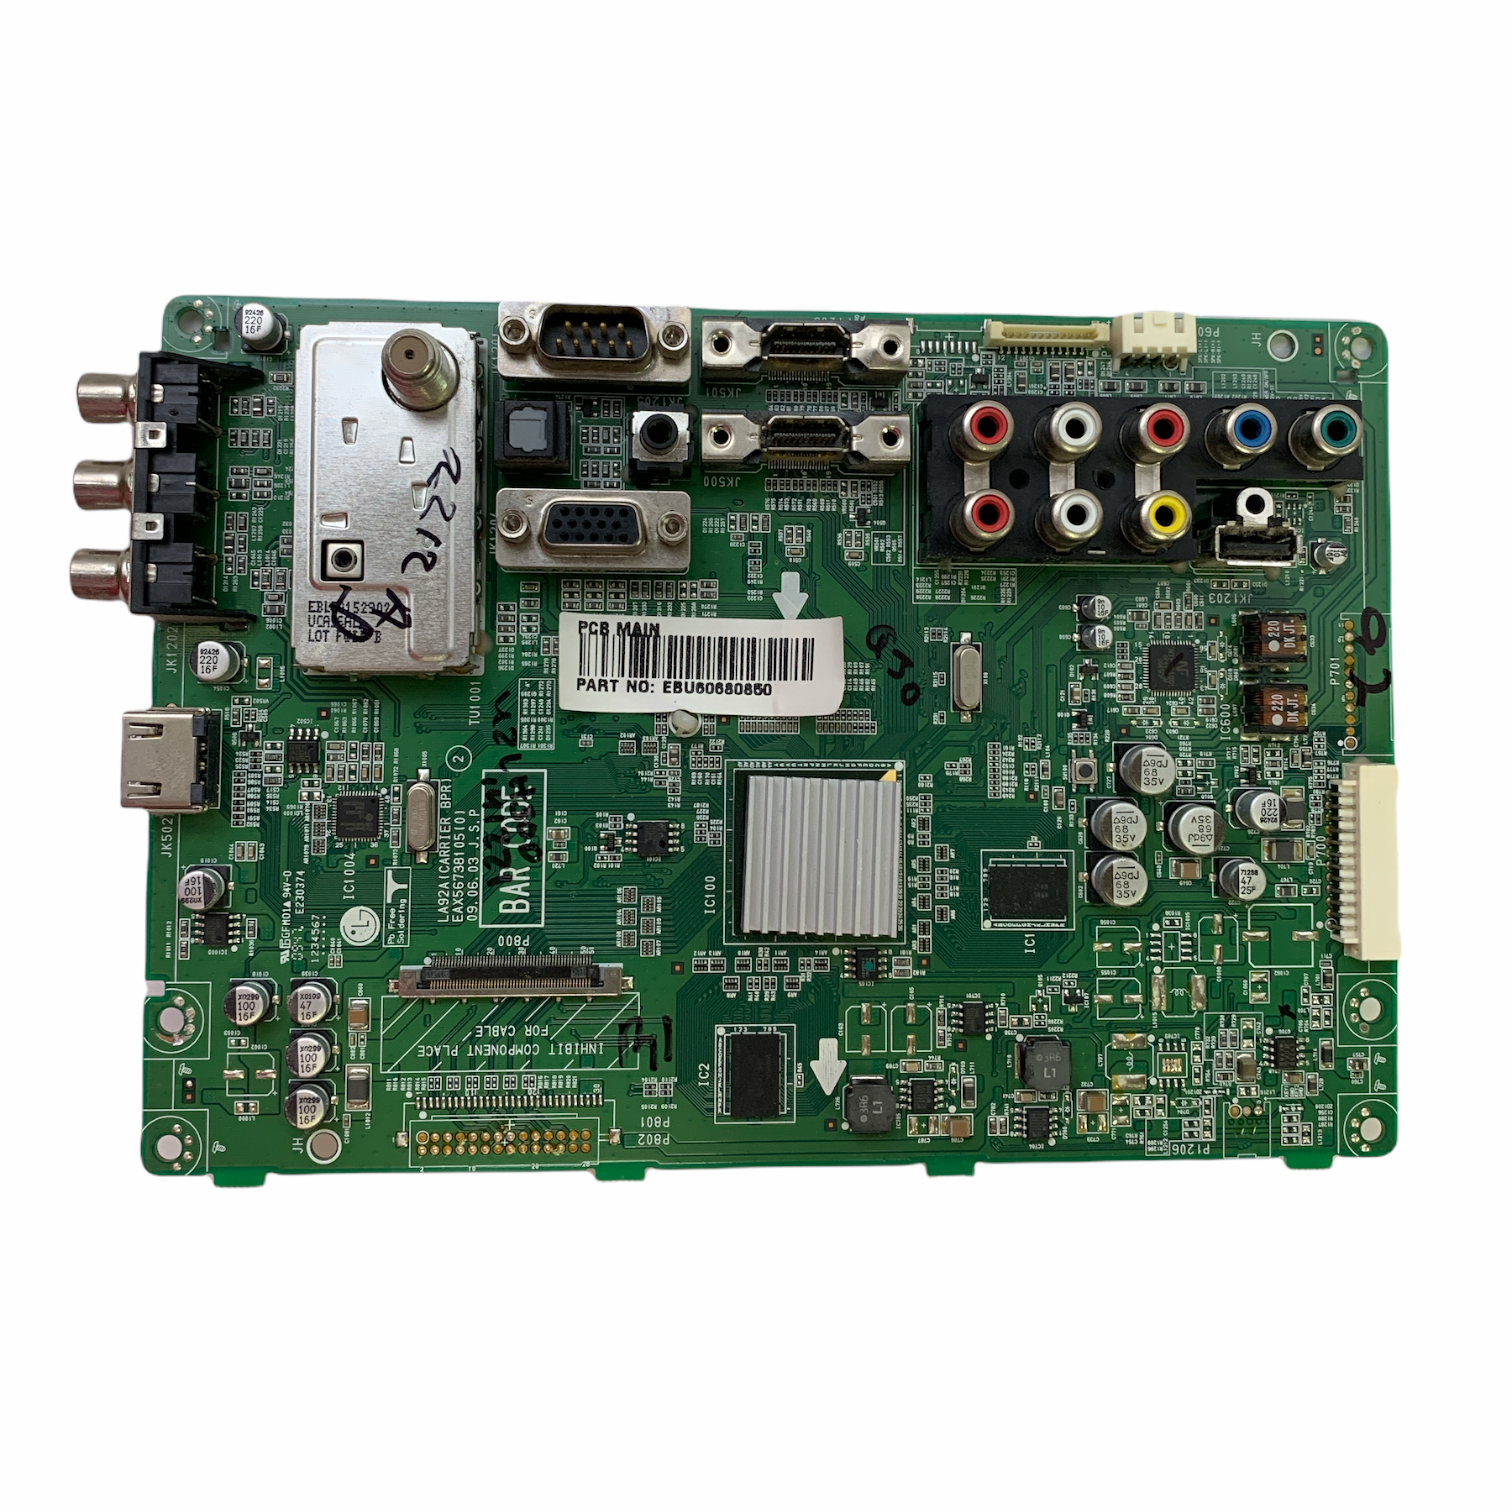 LG EBU60680850 Main Board for 42LH30-UA